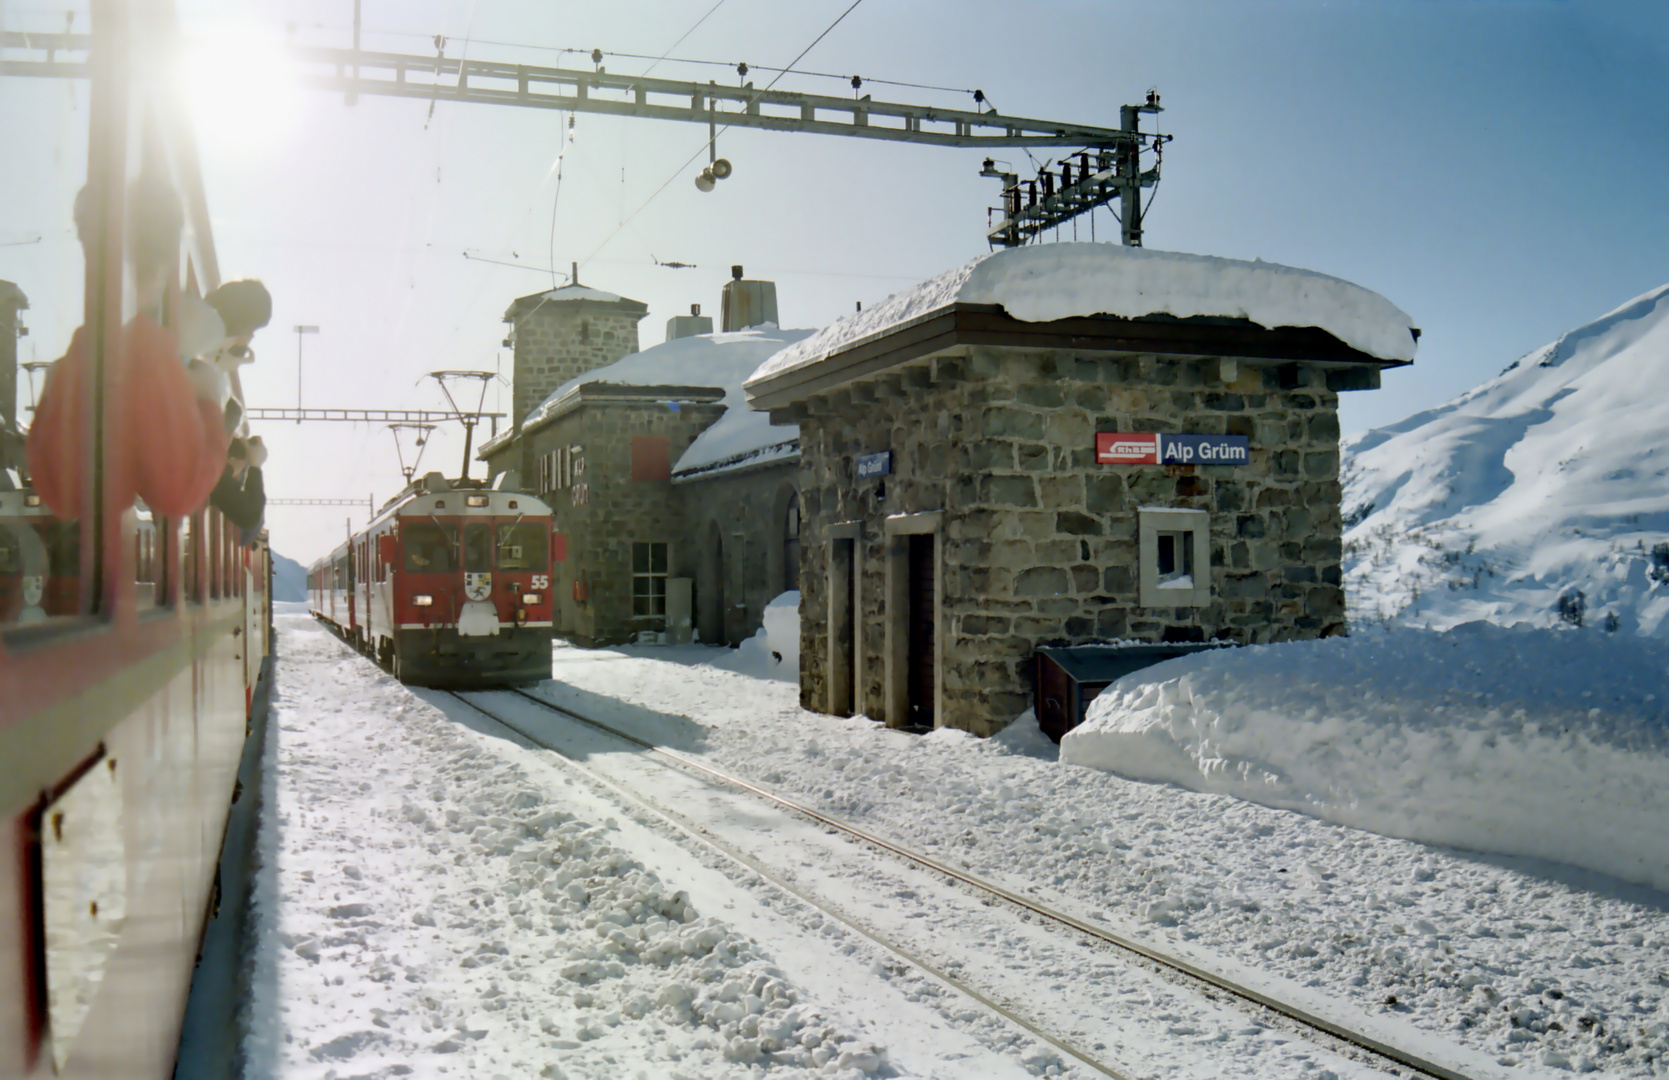 Zugkreuzung in Alp Grüm